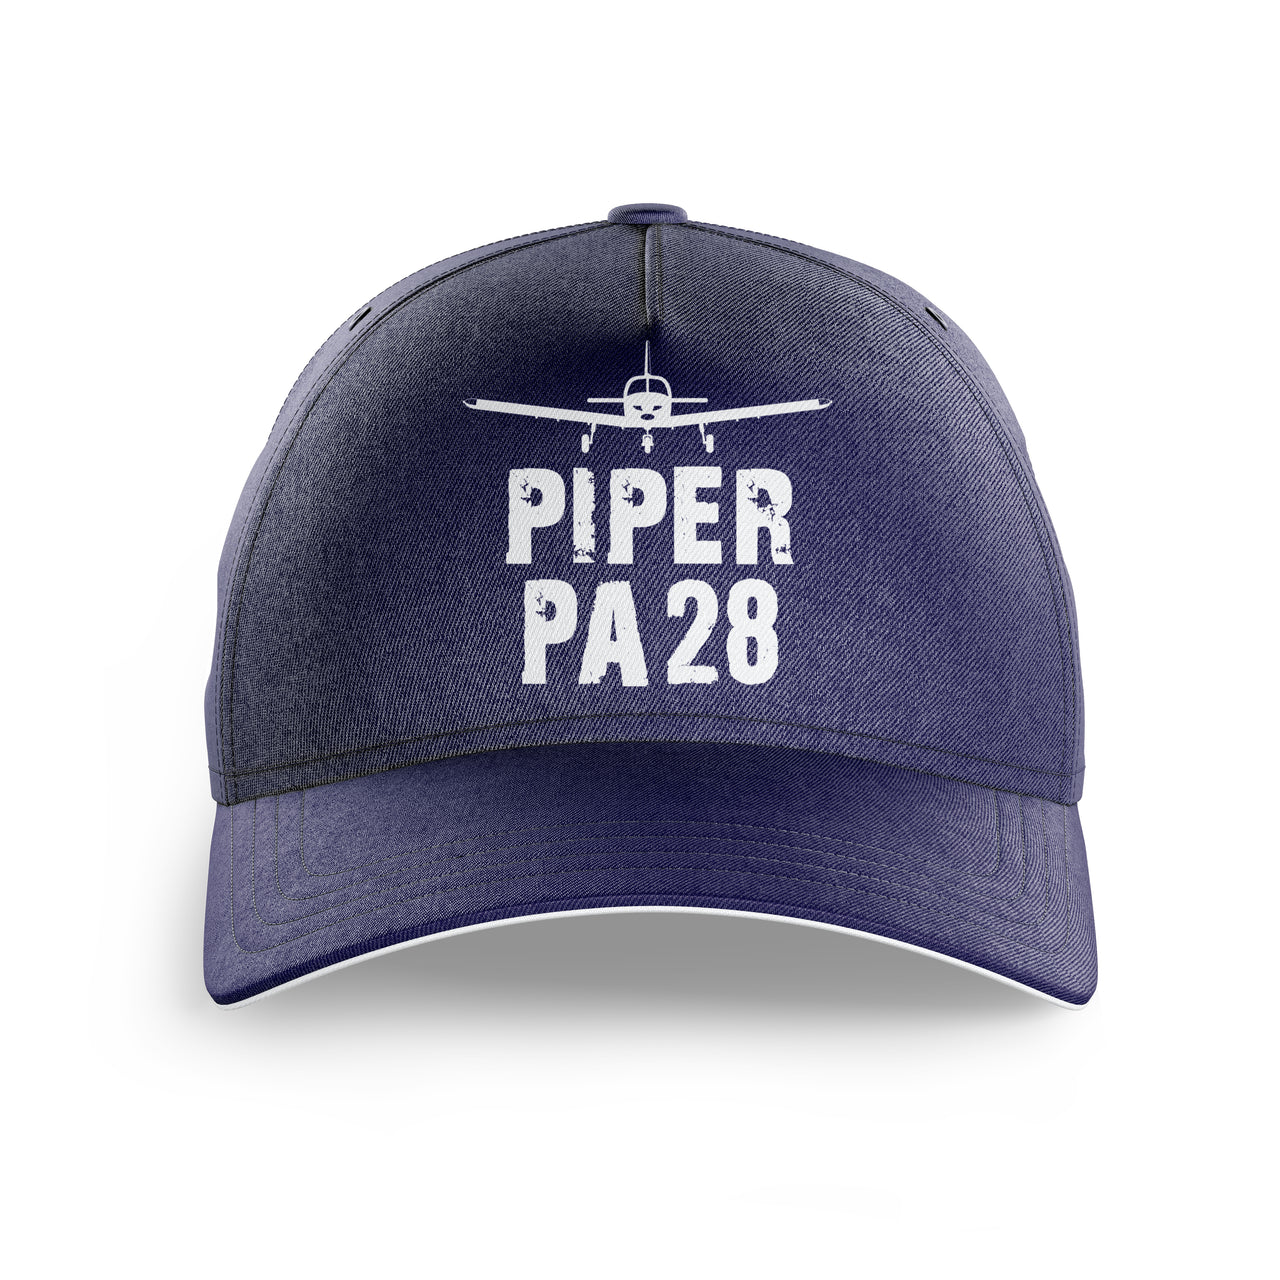 Piper PA28 & Plane Printed Hats